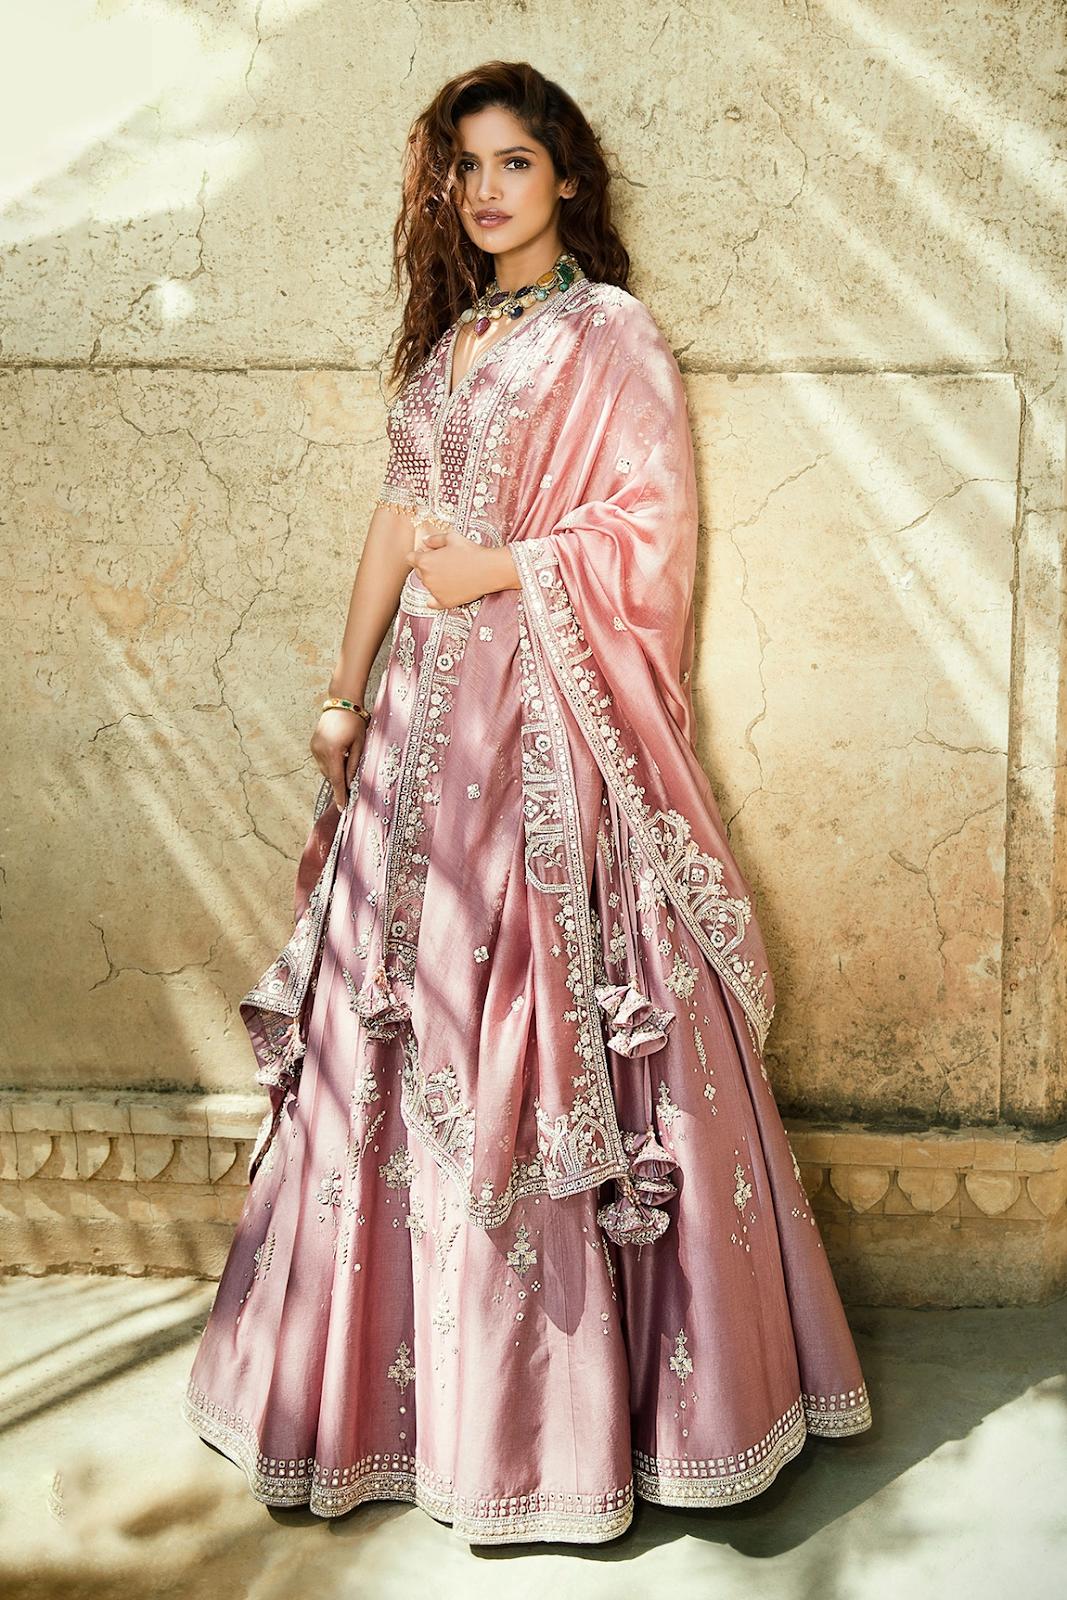 6 Best Indian Engagement Dresses for Brides | Indian Fashion Mantra